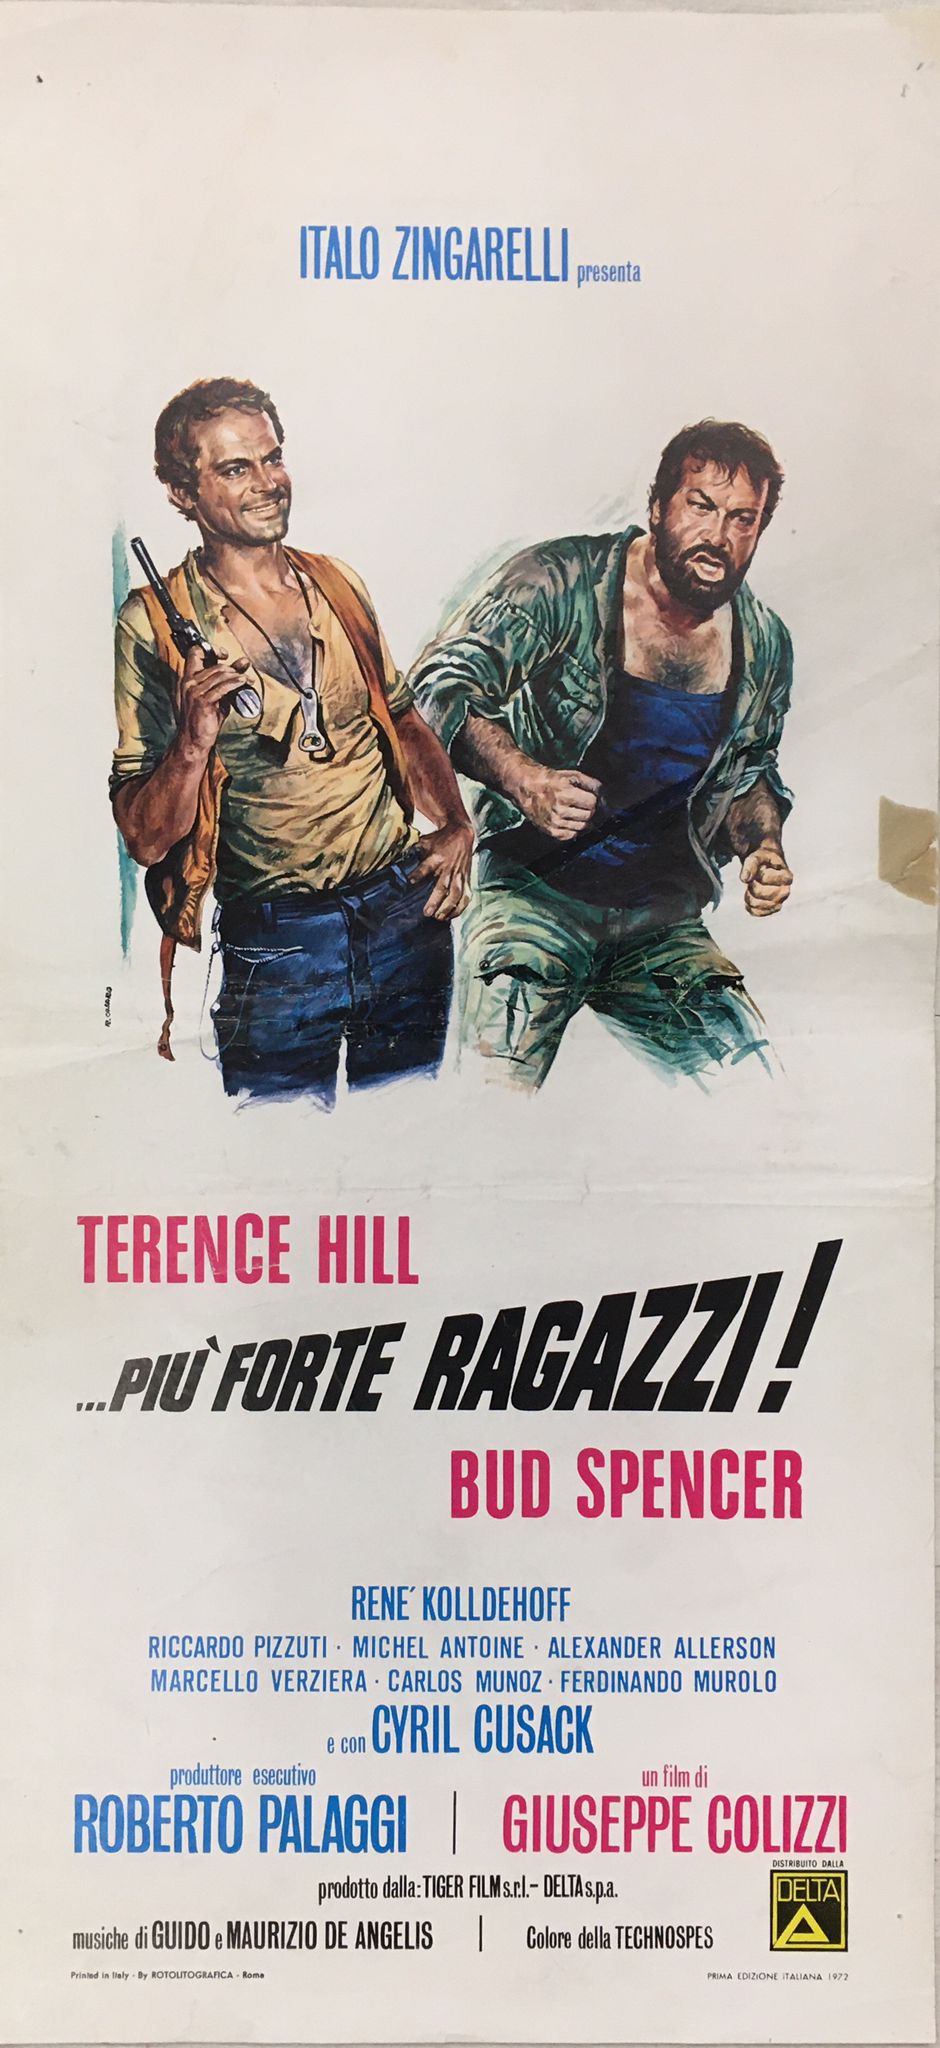 Locandina Di Cinema Originale D'Epoca Più Forte Ragazzi 1972 Tortona4Arte